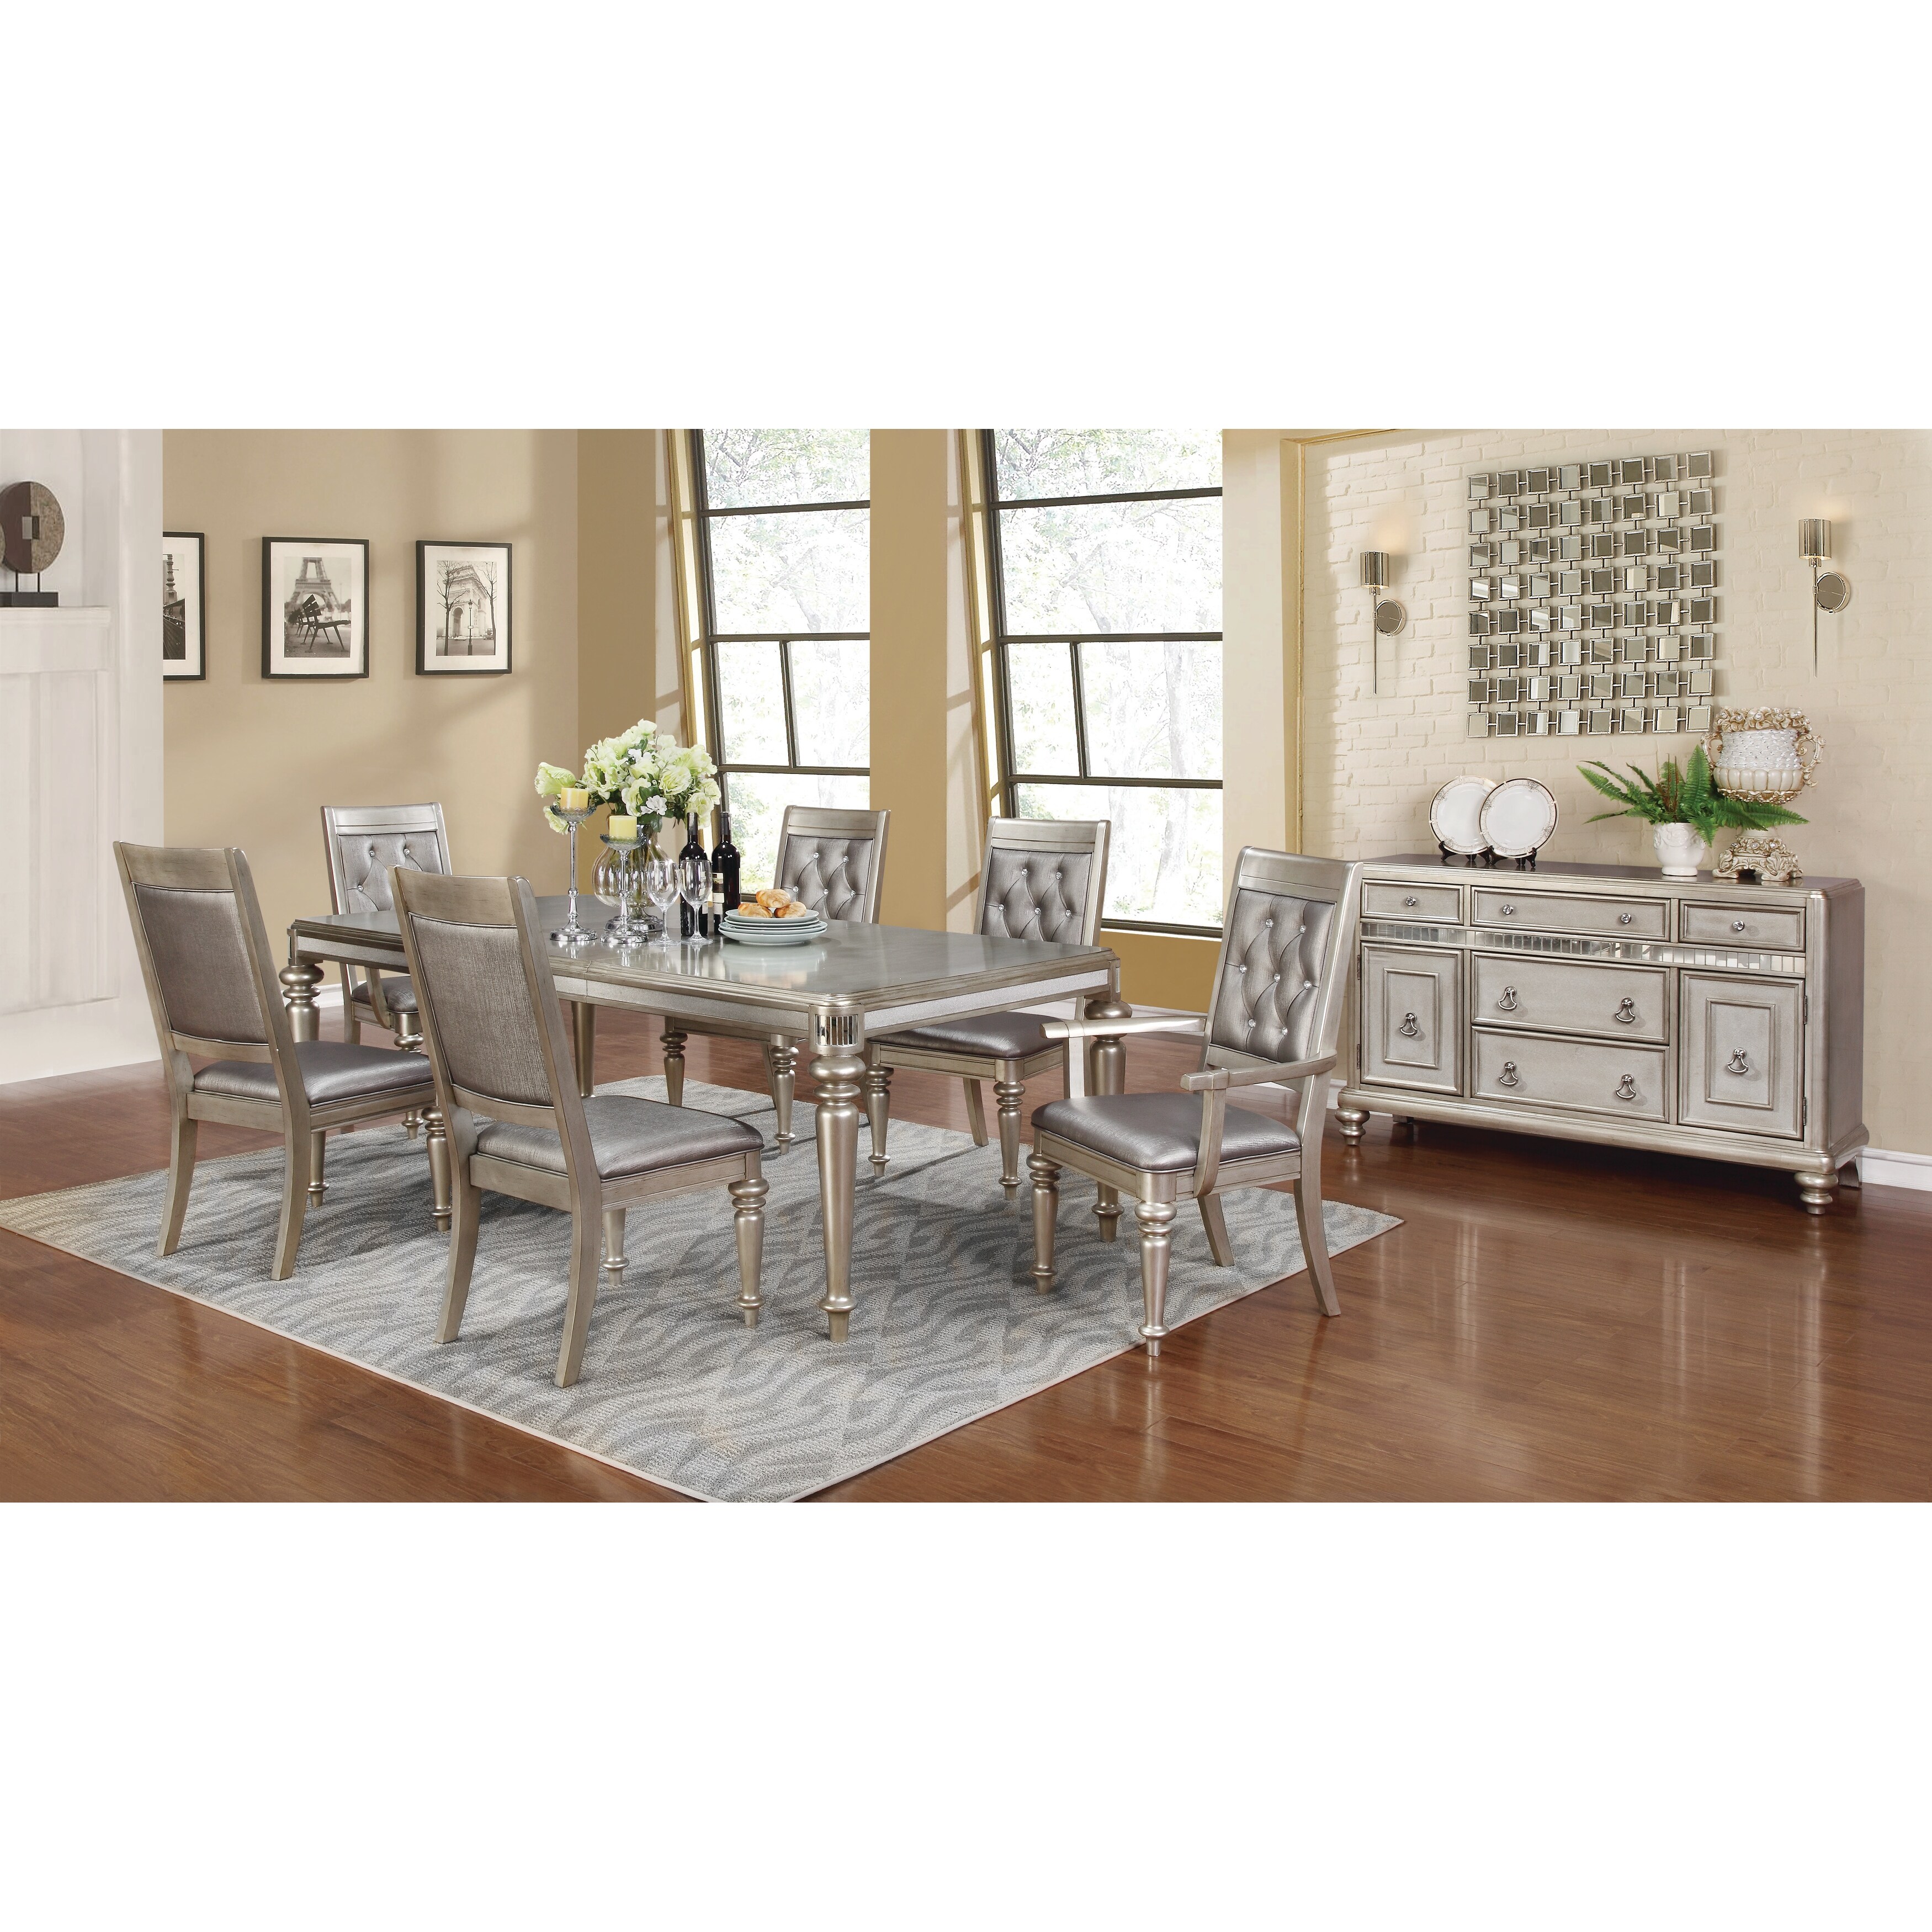 Coaster Furniture Danette Metallic Platinum Rectangular Dining Table with Leaf